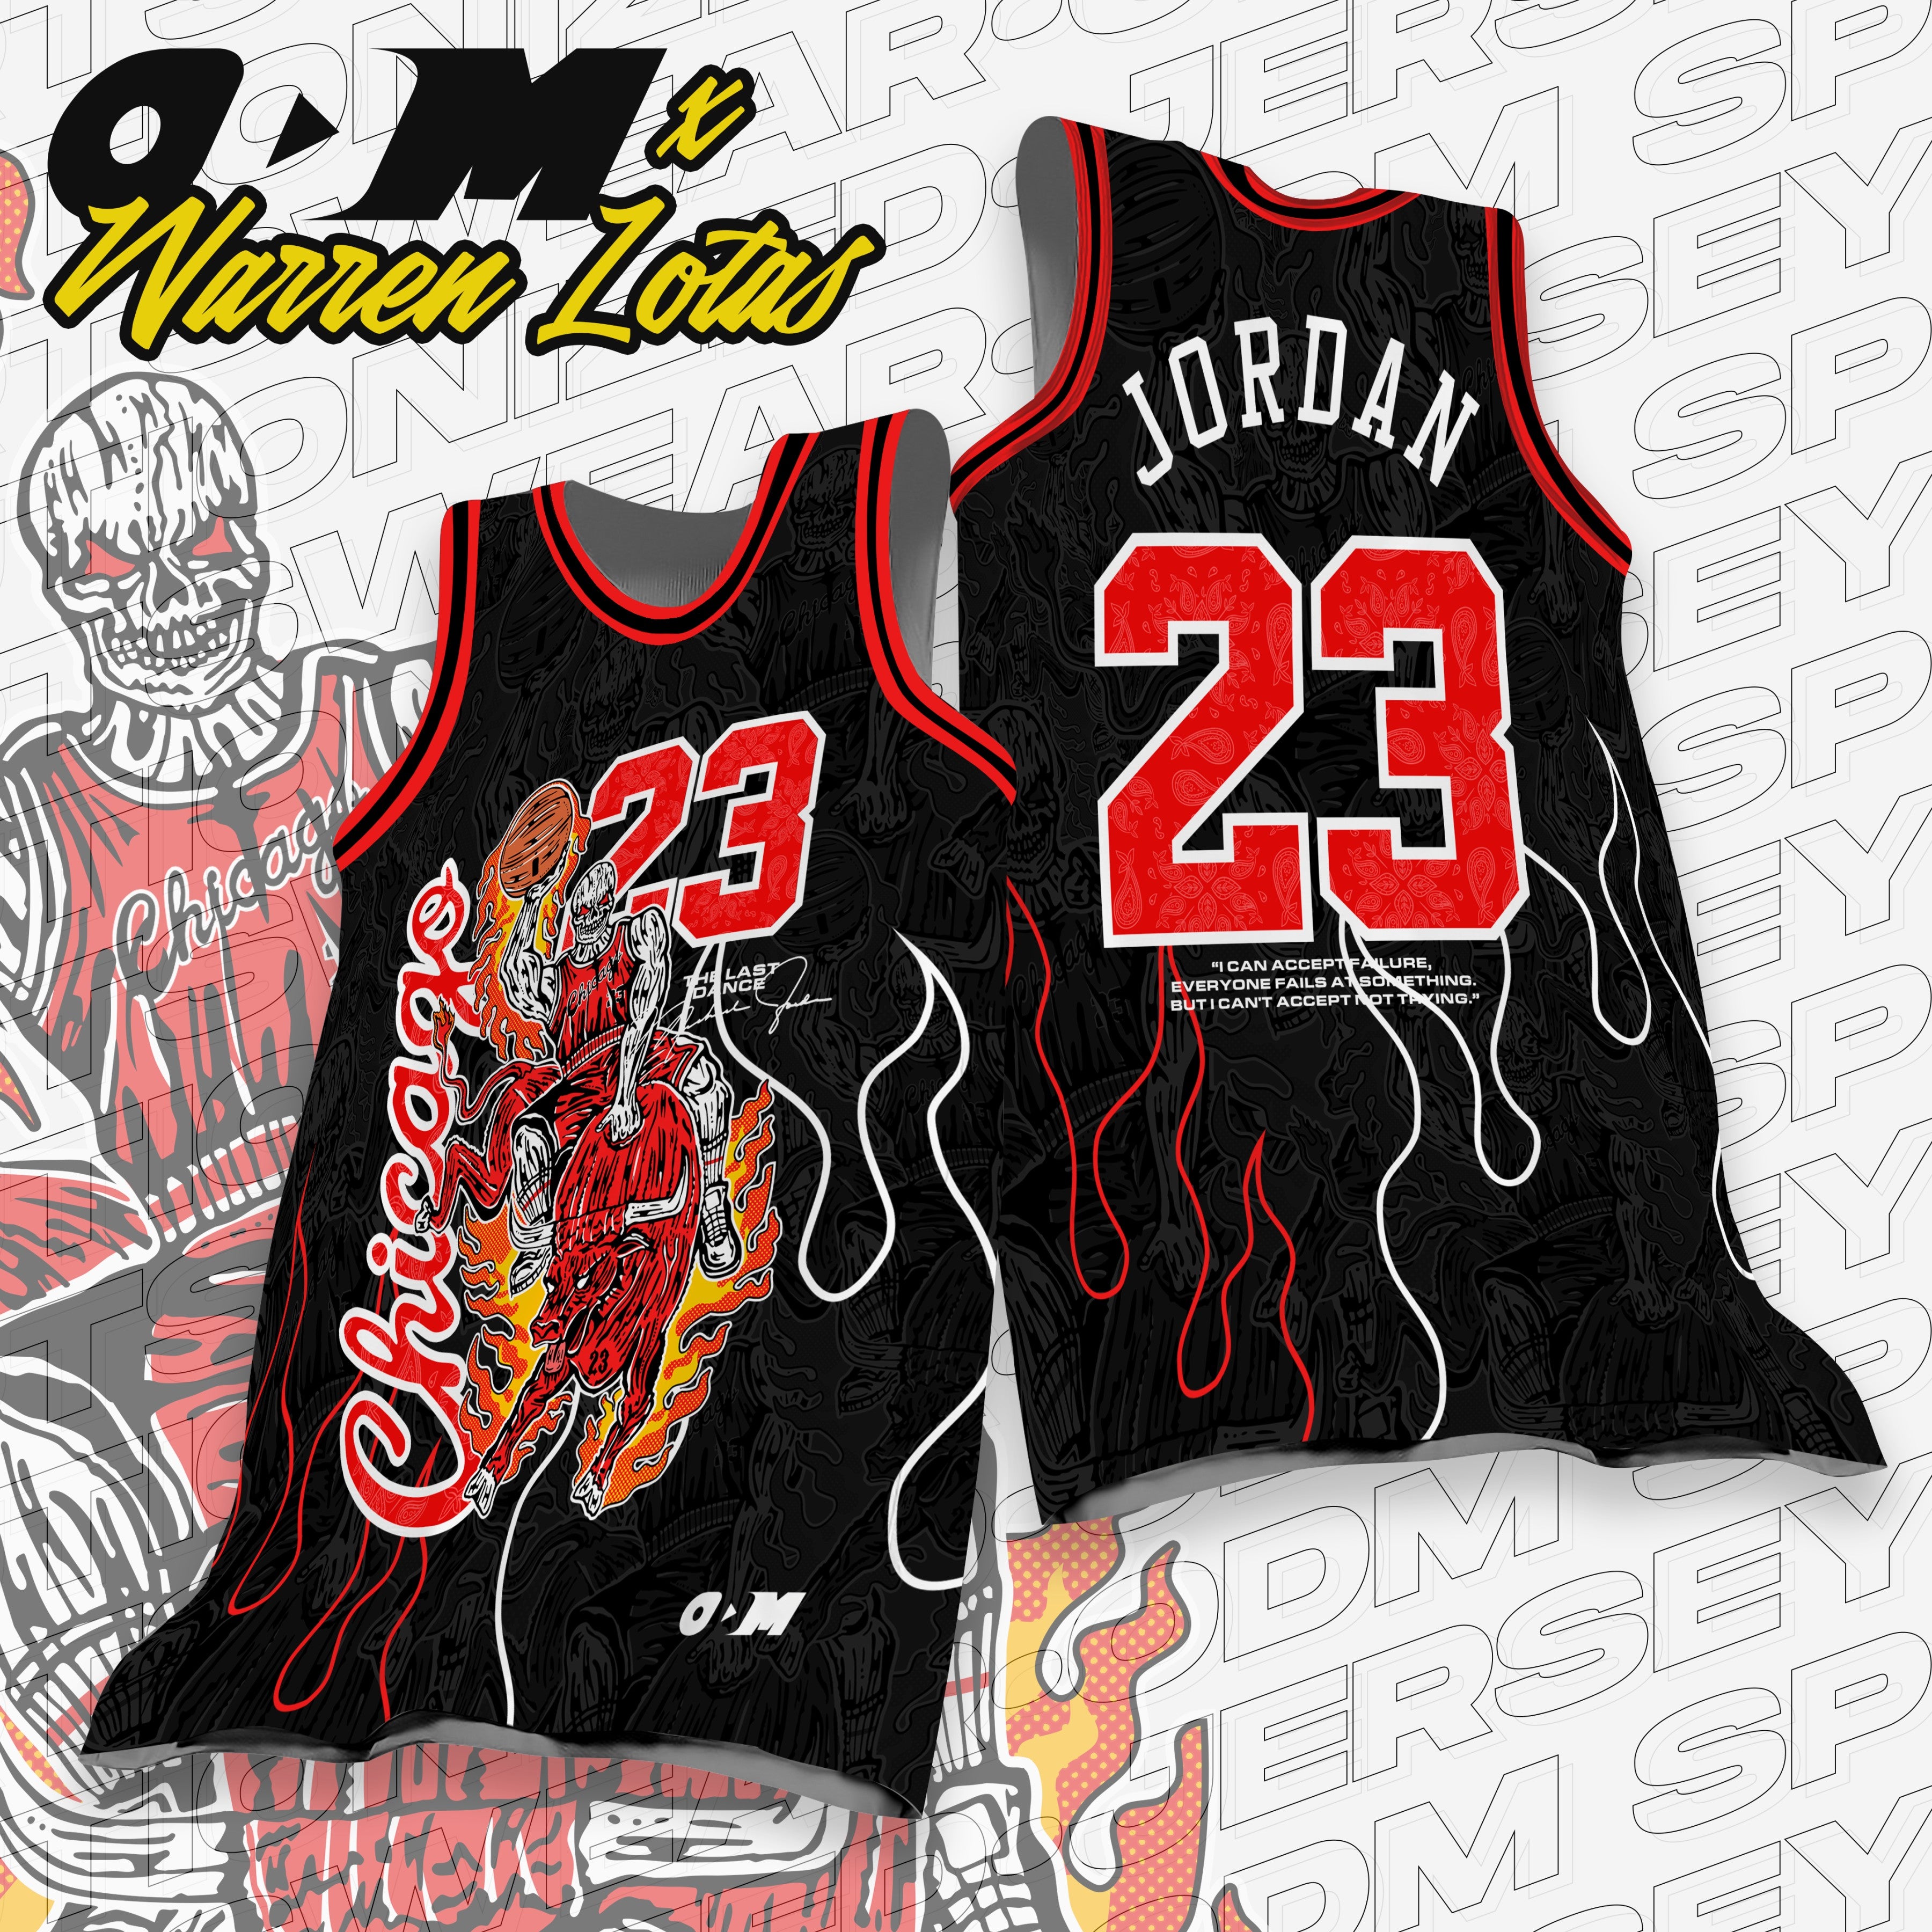 Jordan Bulls x Warren Lotas inspired jersey